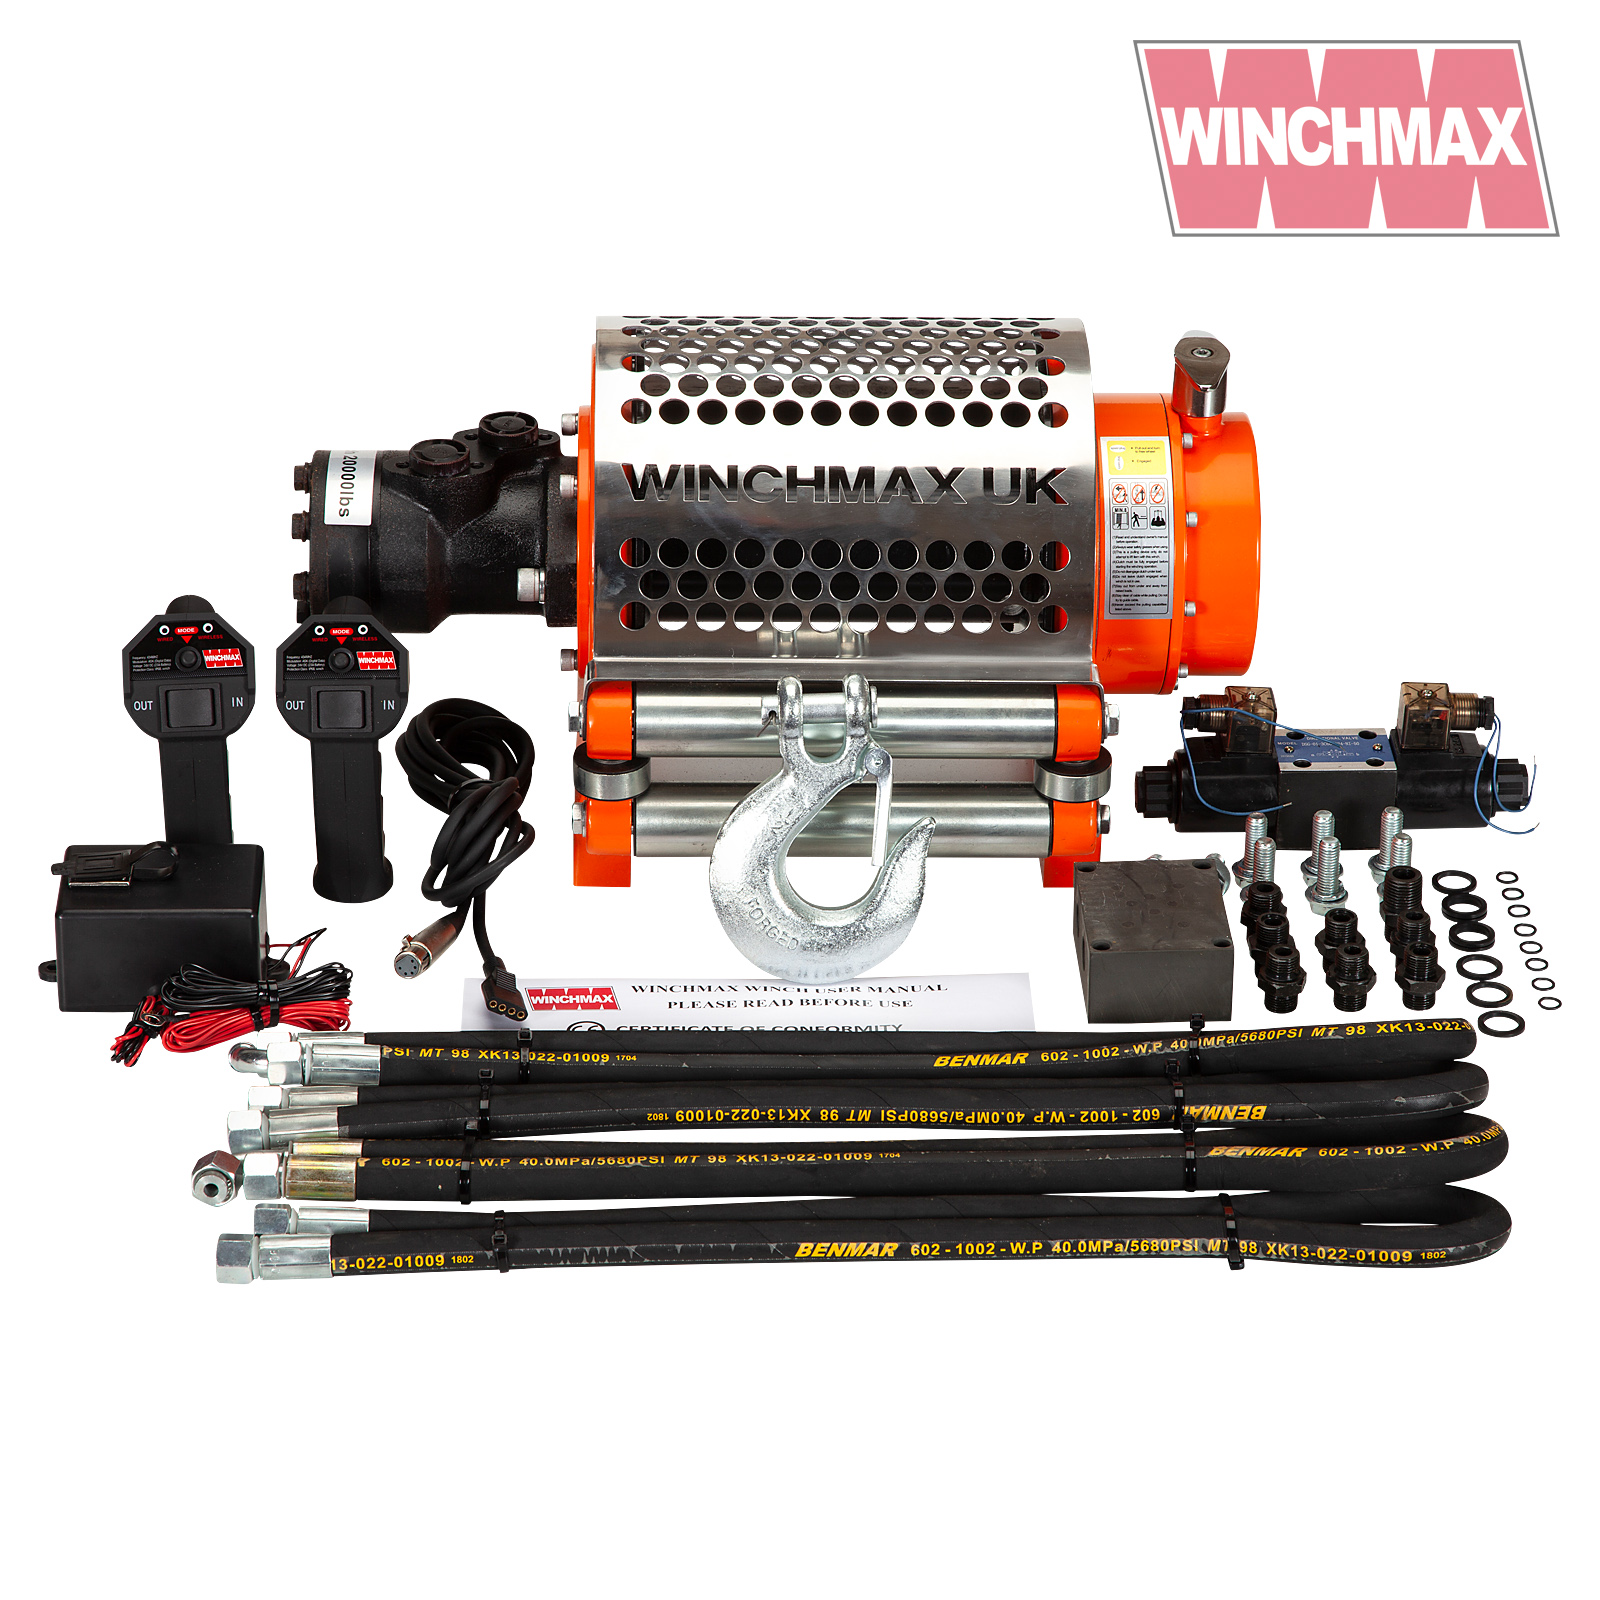 Winchmax 20000lb 'Z' Hydraulic Winch. Steel Rope and 12v Control System